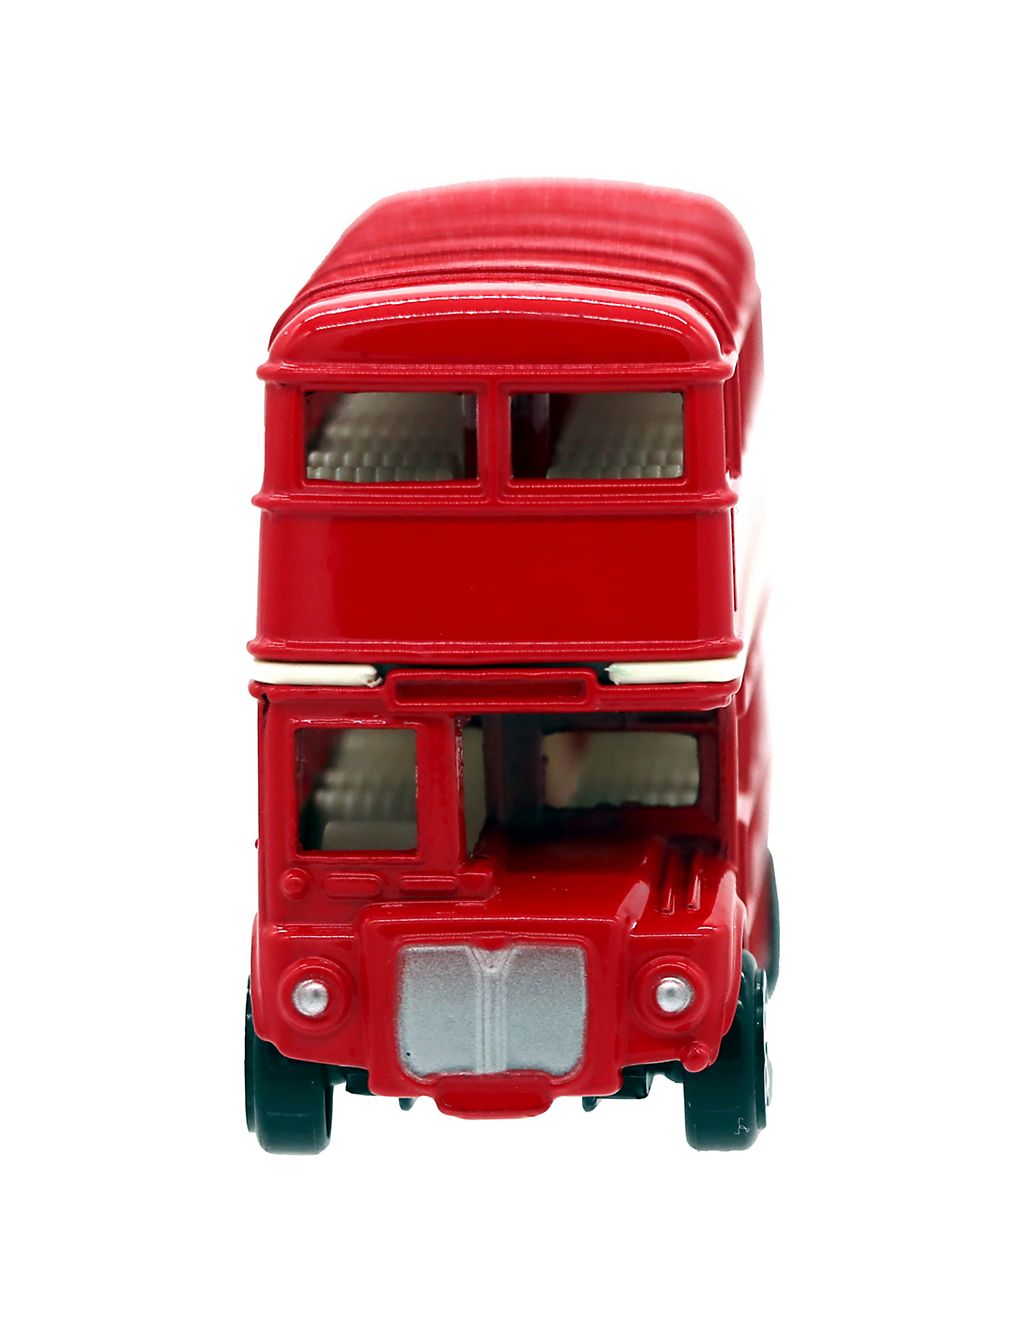 London Trio Transport Vehicles Set (3+ Yrs) 2 of 5